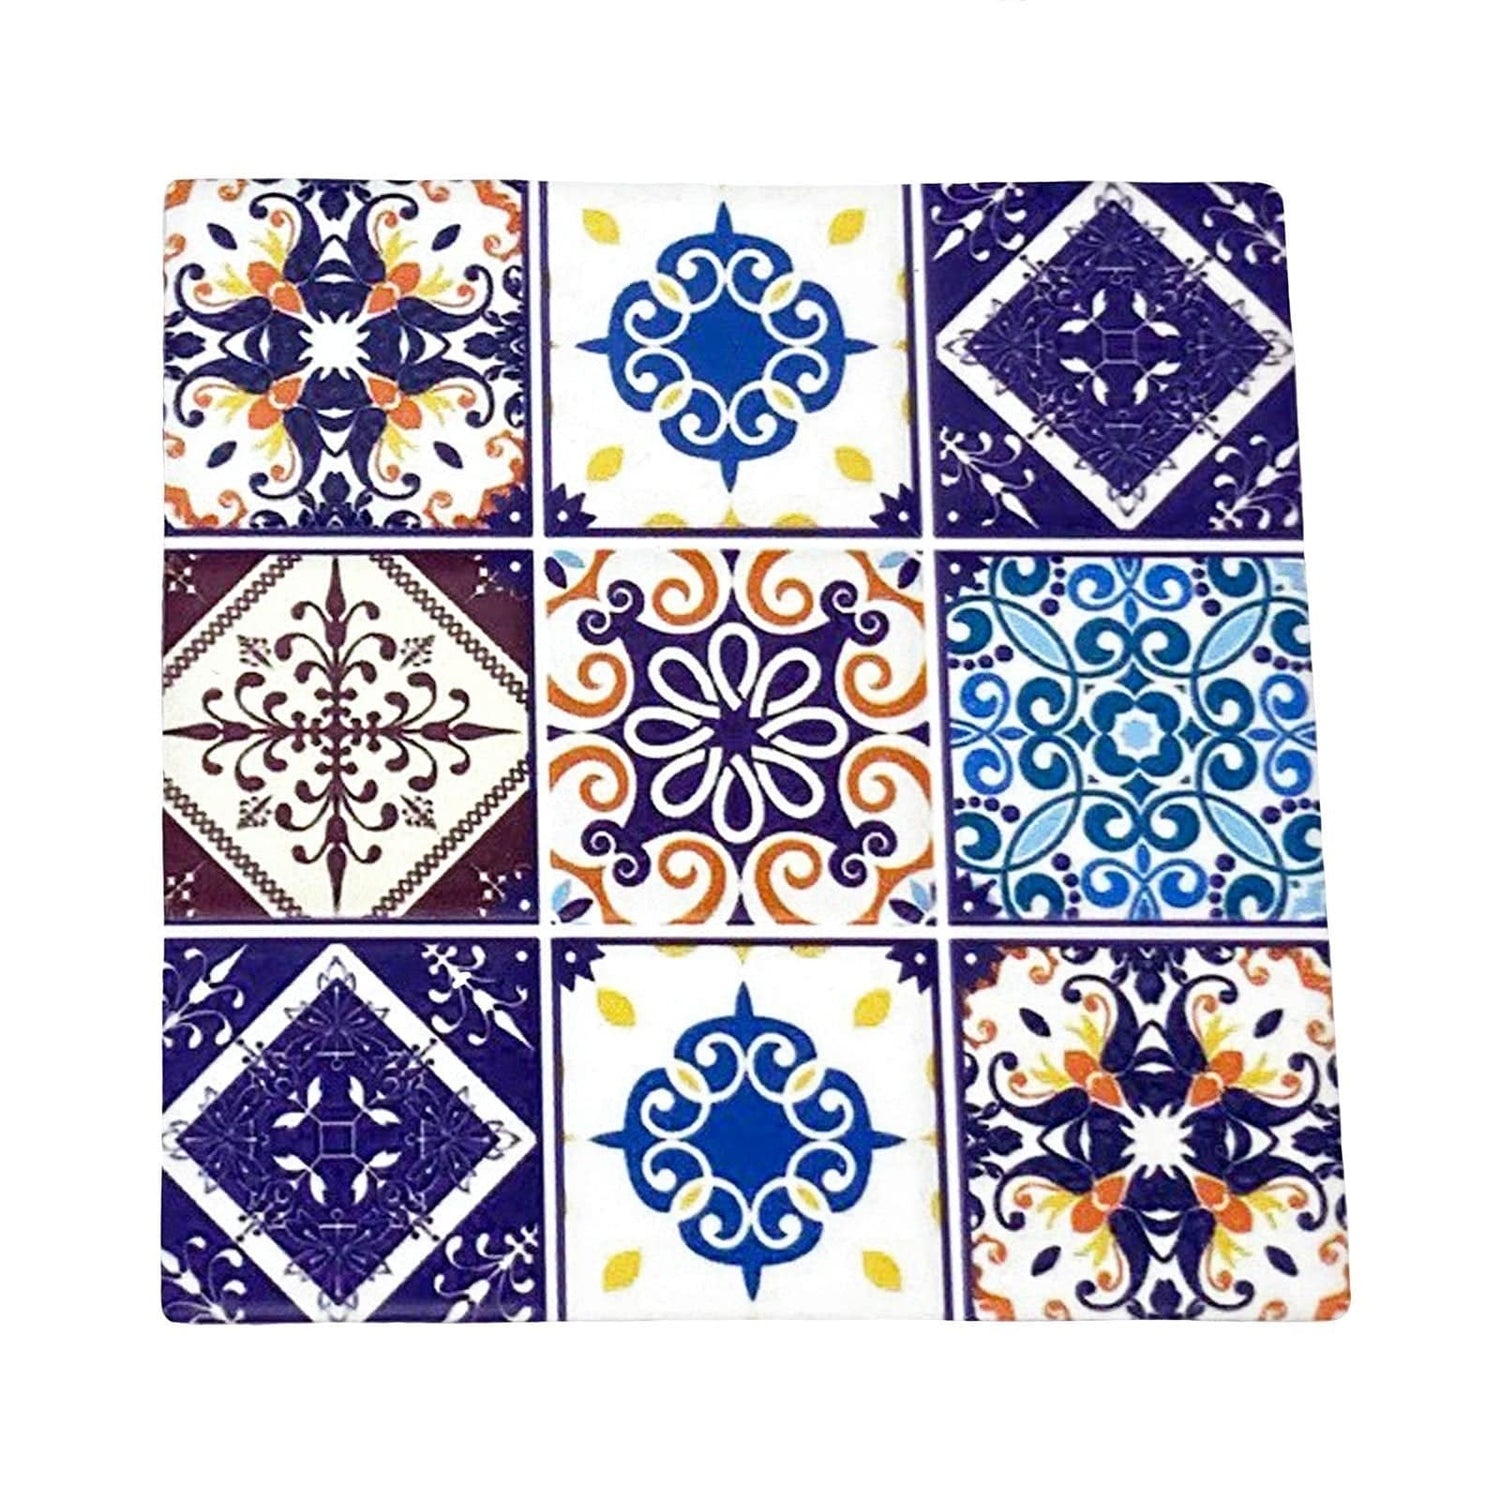 Moroccan Tile Coasters - Design 8 - Set of 4.